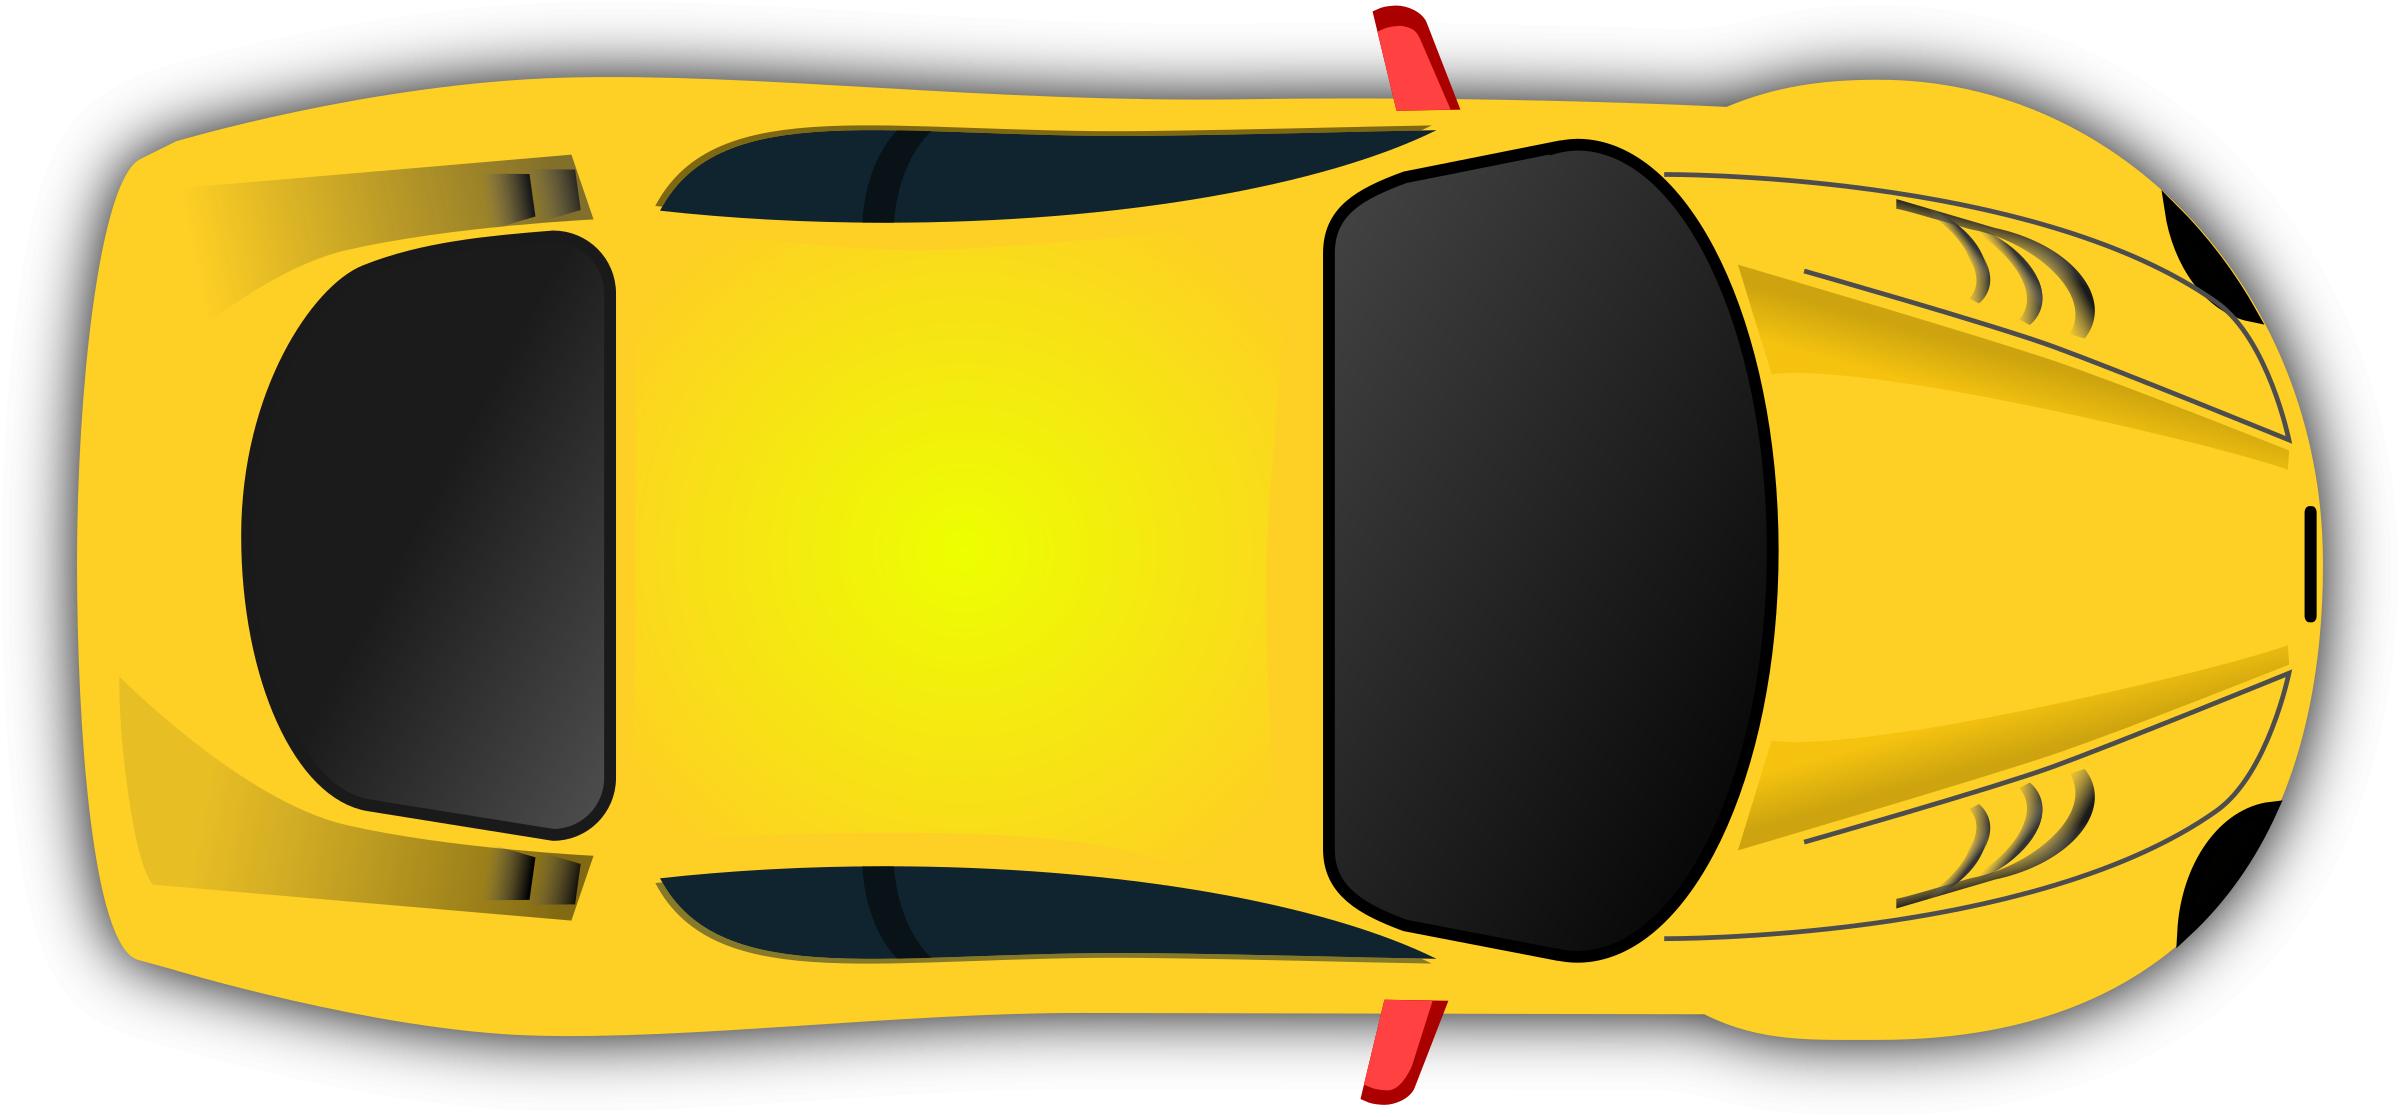 Car Top view remix racing game png icons